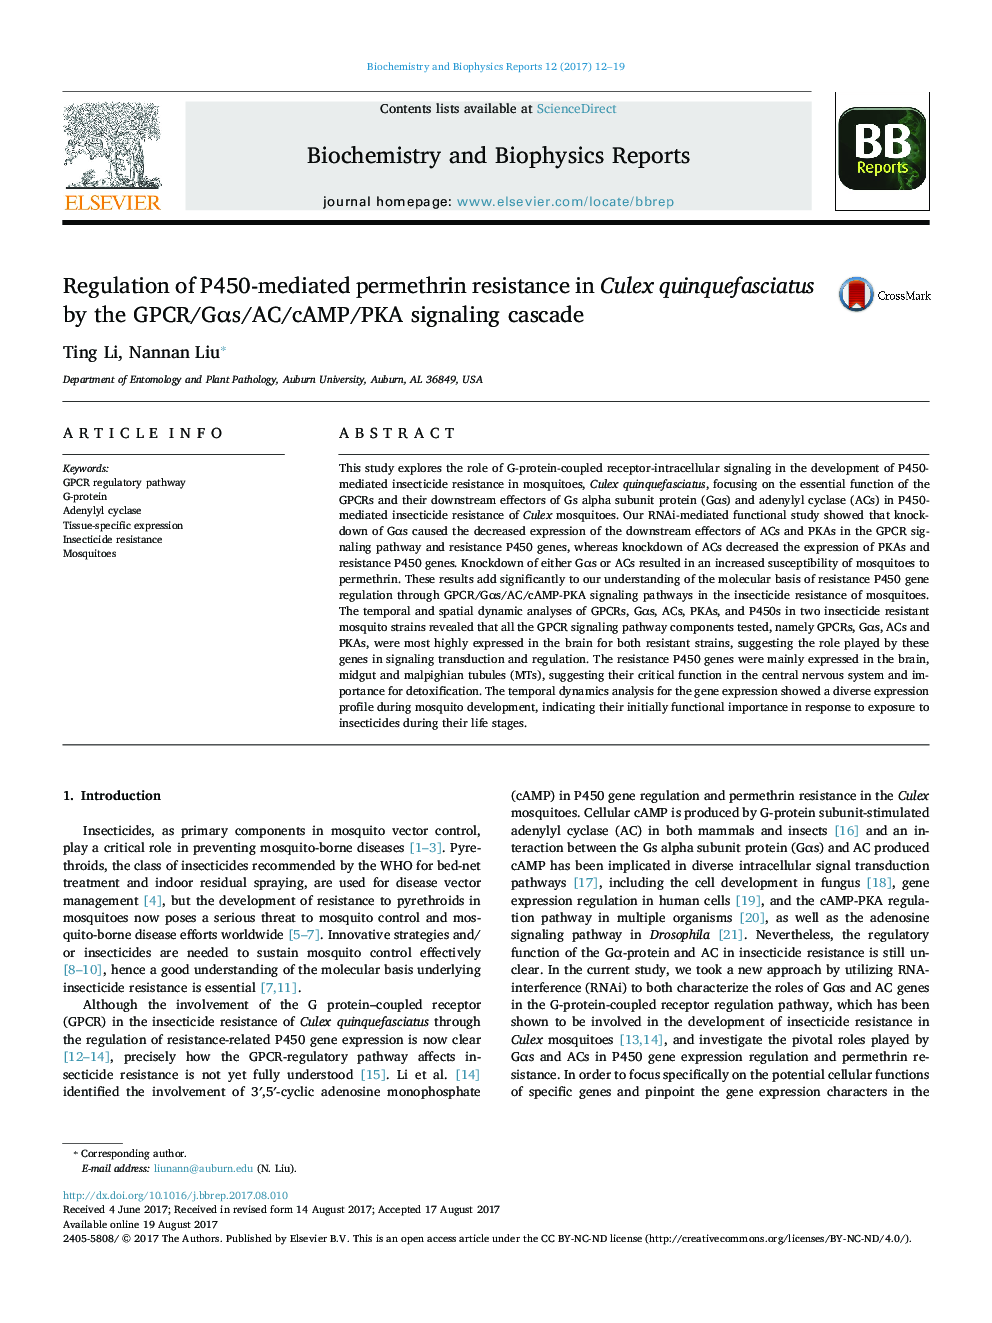 Regulation of P450-mediated permethrin resistance in Culex quinquefasciatus by the GPCR/GÎ±s/AC/cAMP/PKA signaling cascade